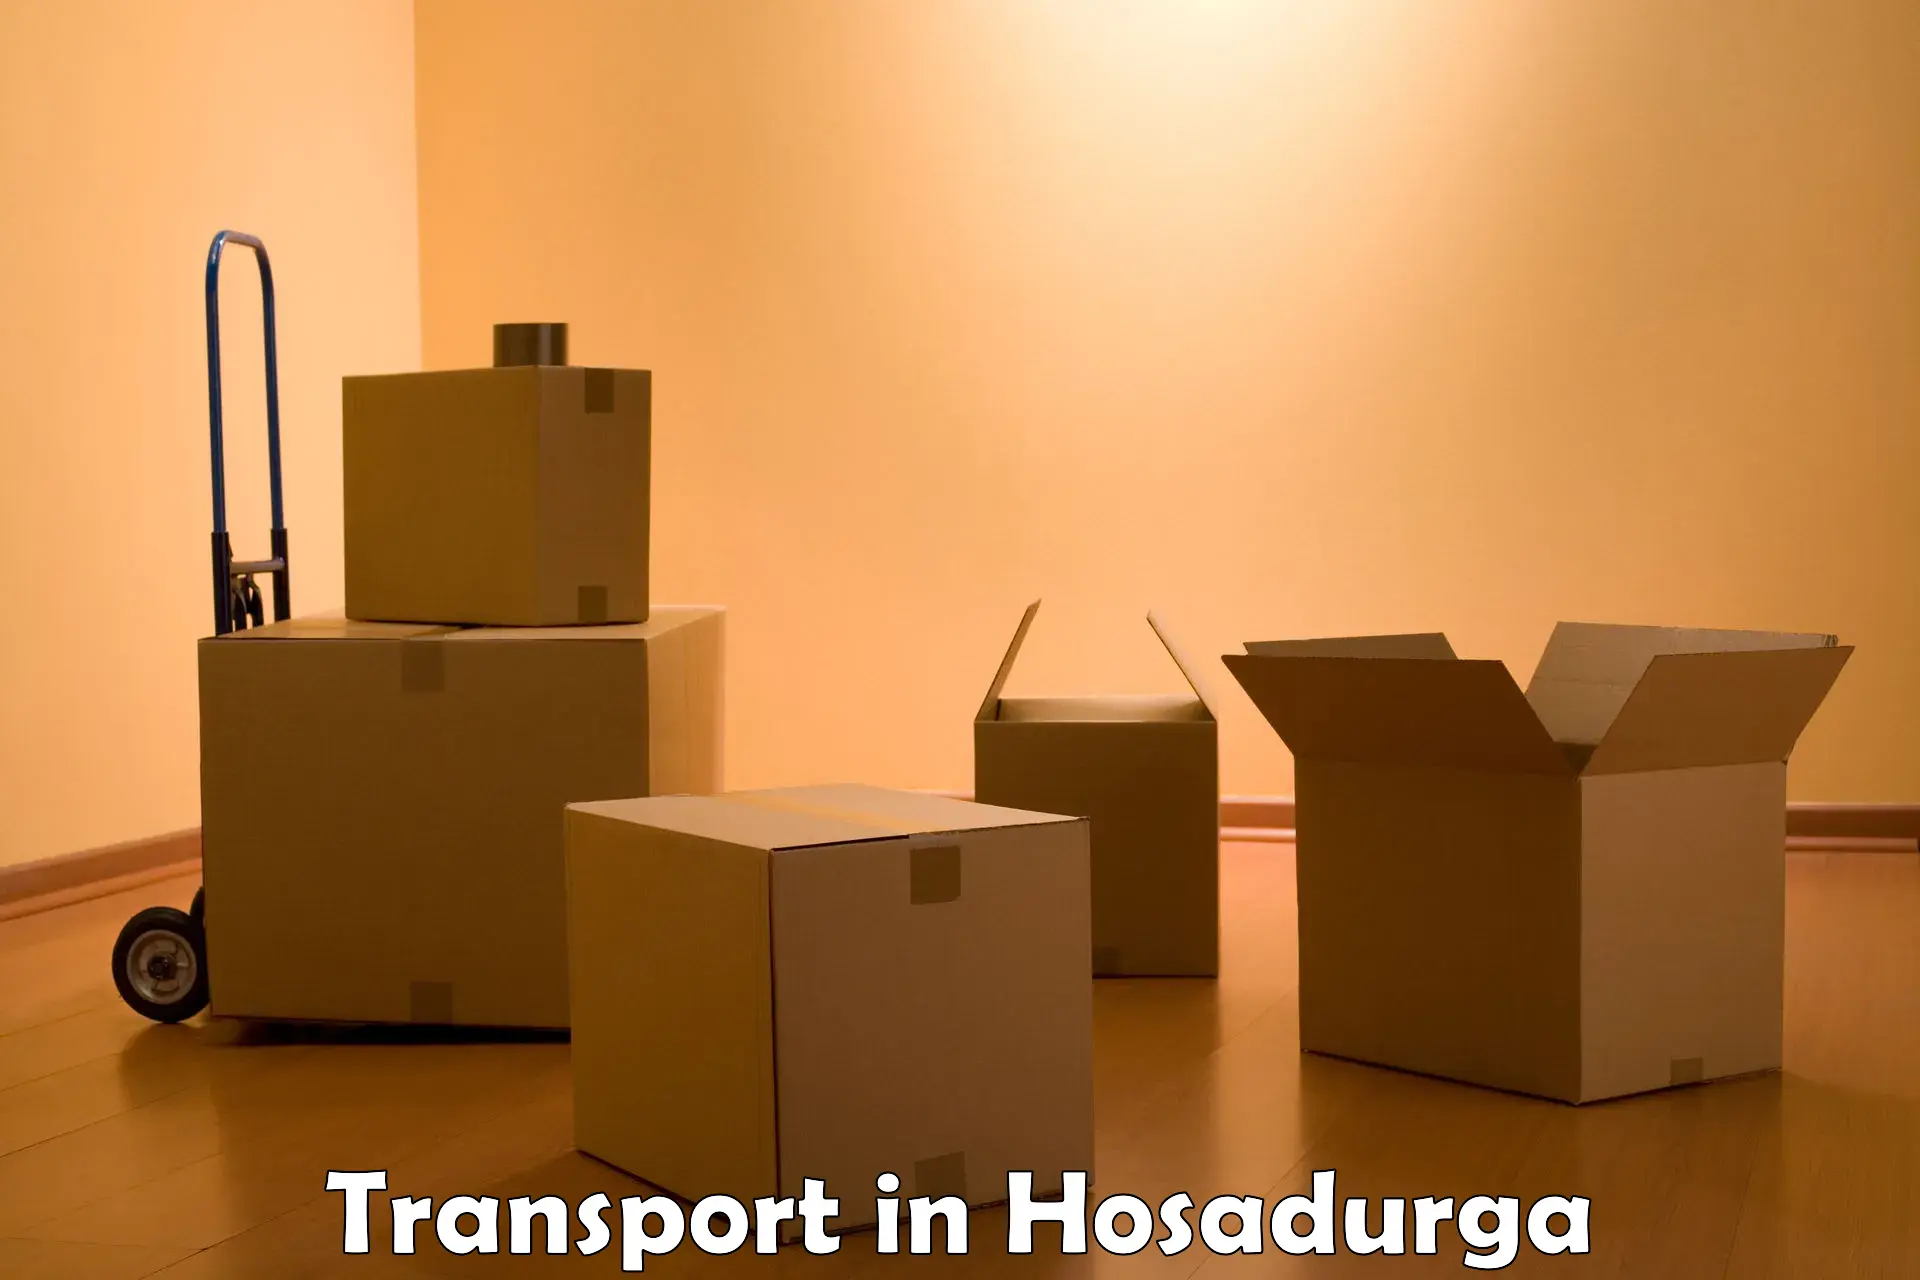 Domestic goods transportation services in Hosadurga